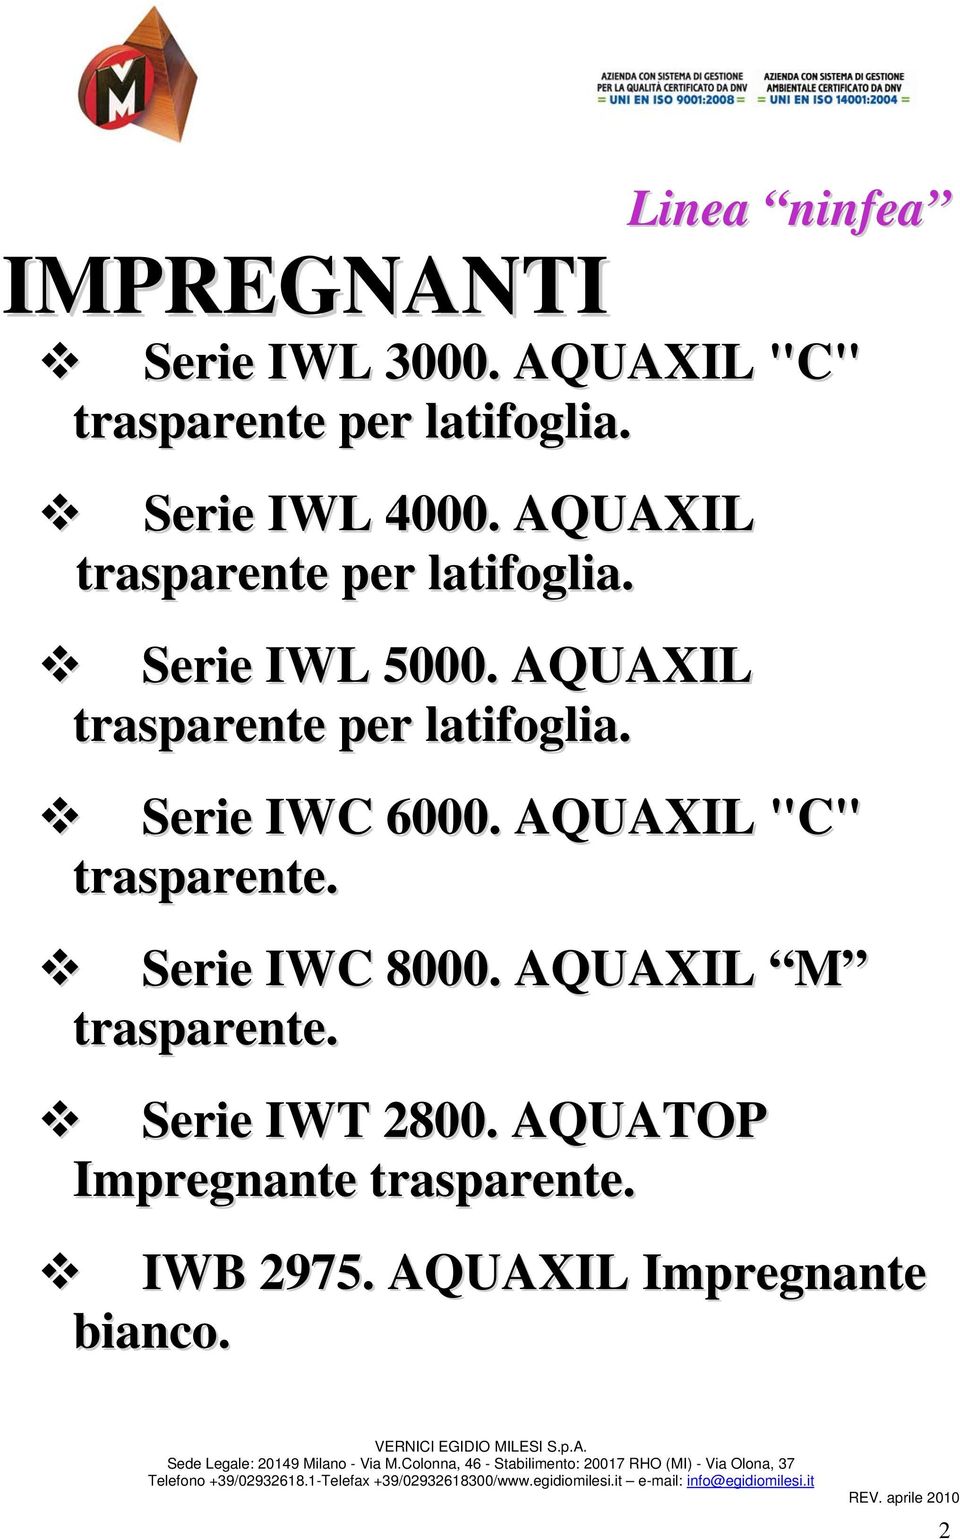 AQUAXIL "C" trasparente. Serie IWC 8000. AQUAXIL M trasparente. Serie IWT 2800. AQUATOP Impregnante trasparente.